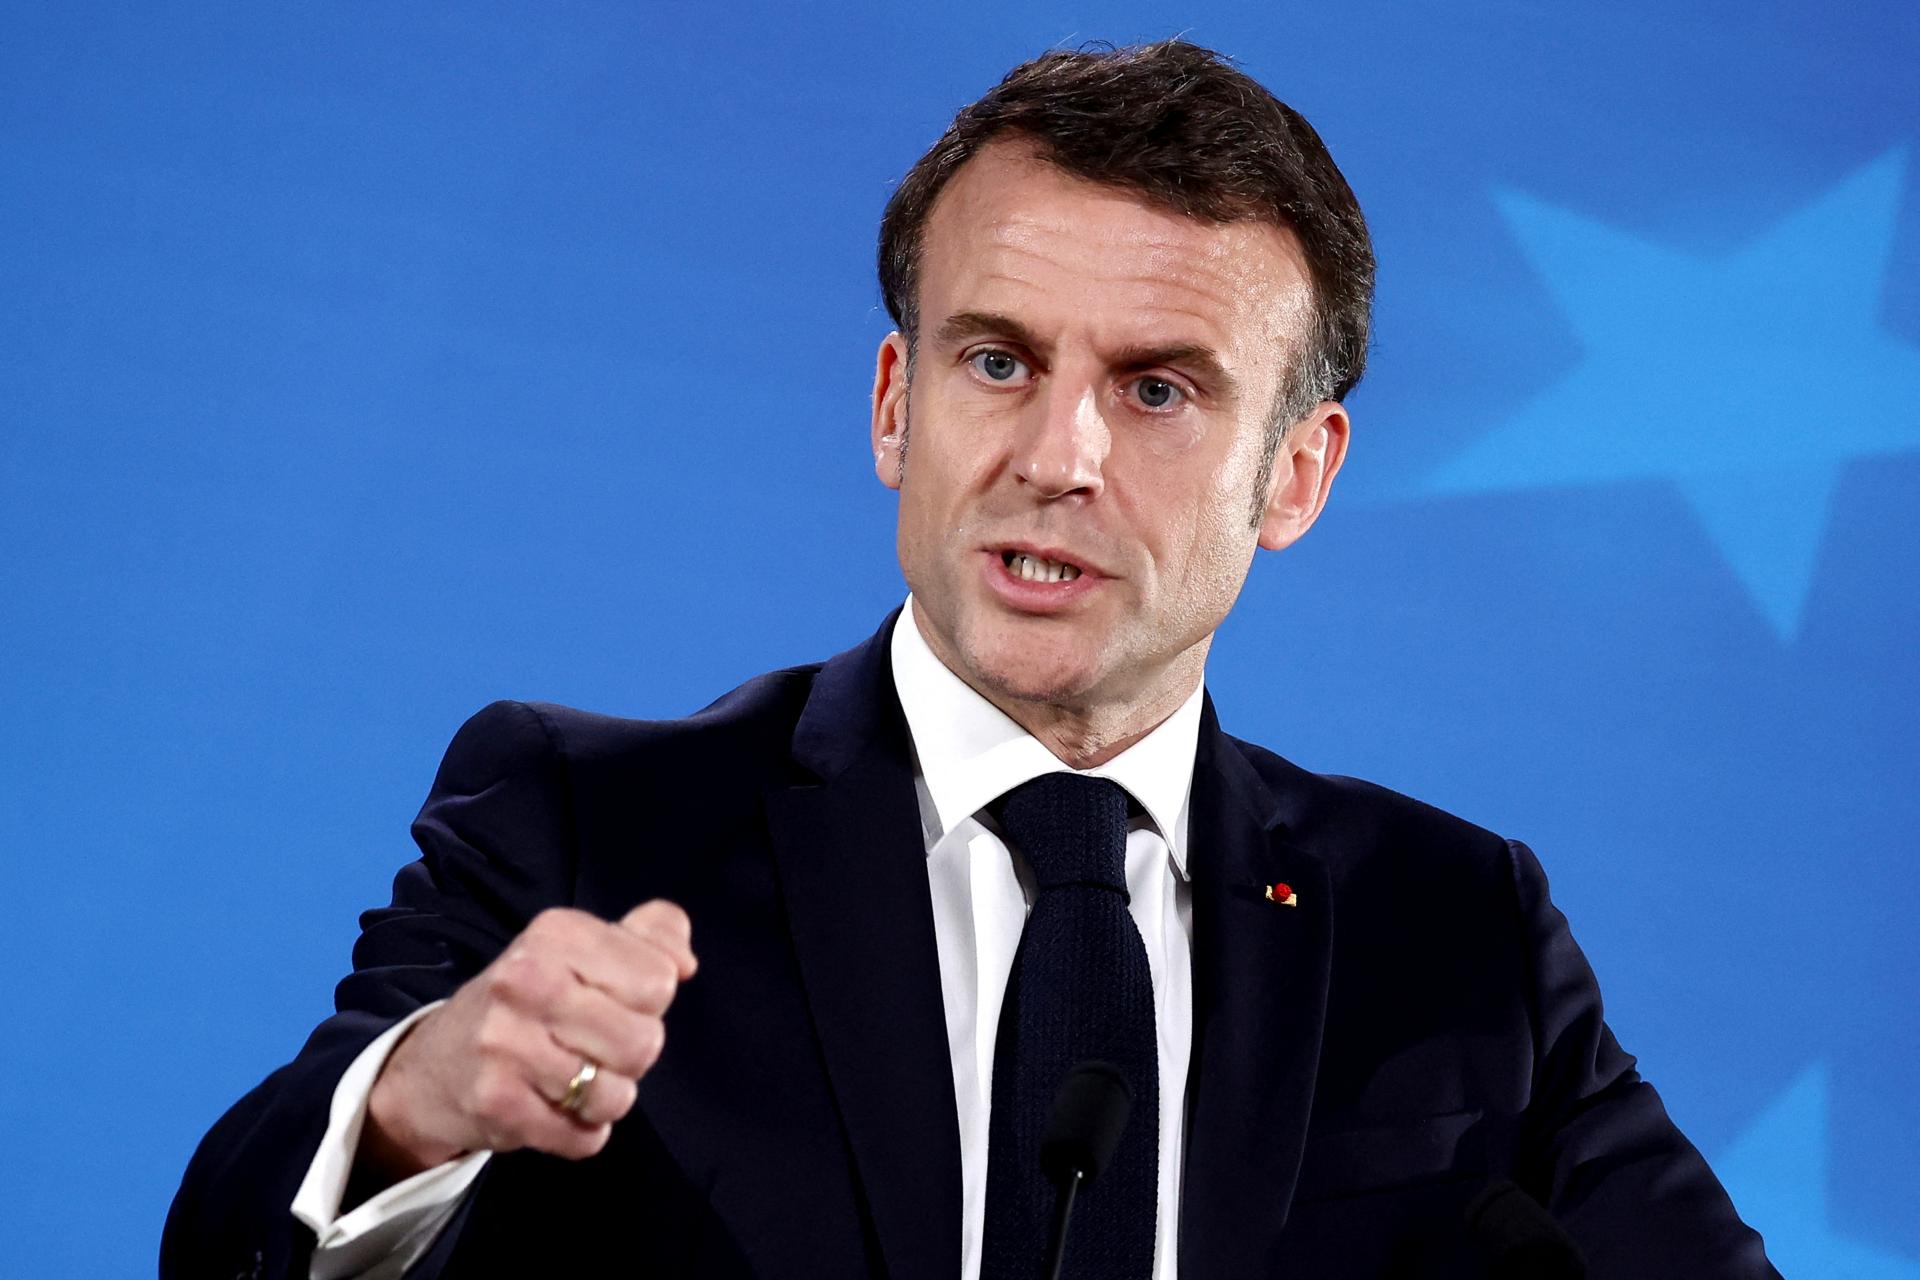 Francúzsko mohlo zastaviť genocídu v Rwande, ale nemalo vôľu, vyhlásil Macron